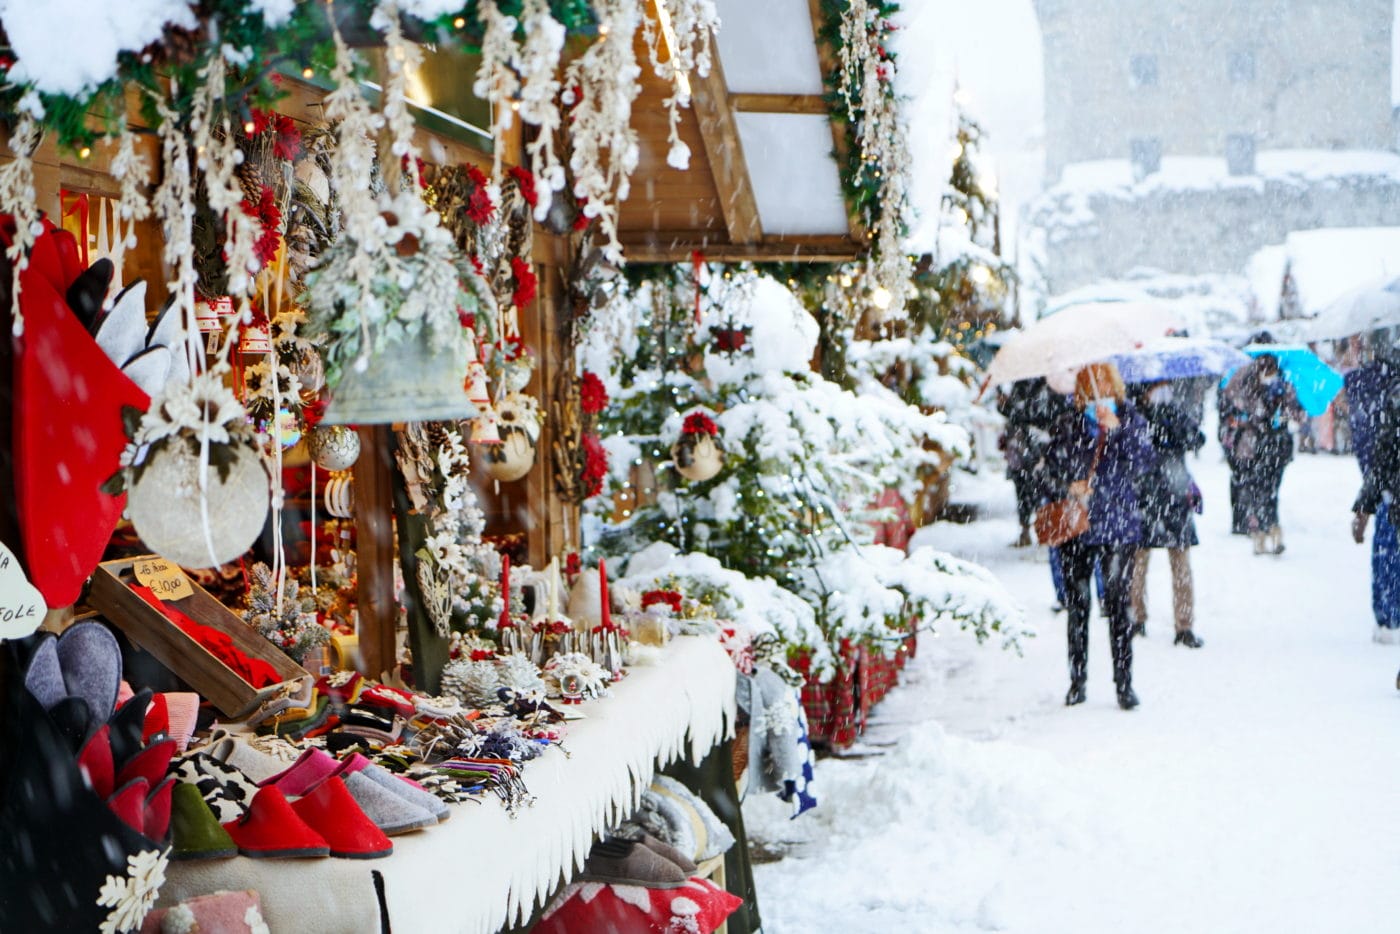 Traditional Christmas market under heavy snowfall. Aosta, Italy -December 2021